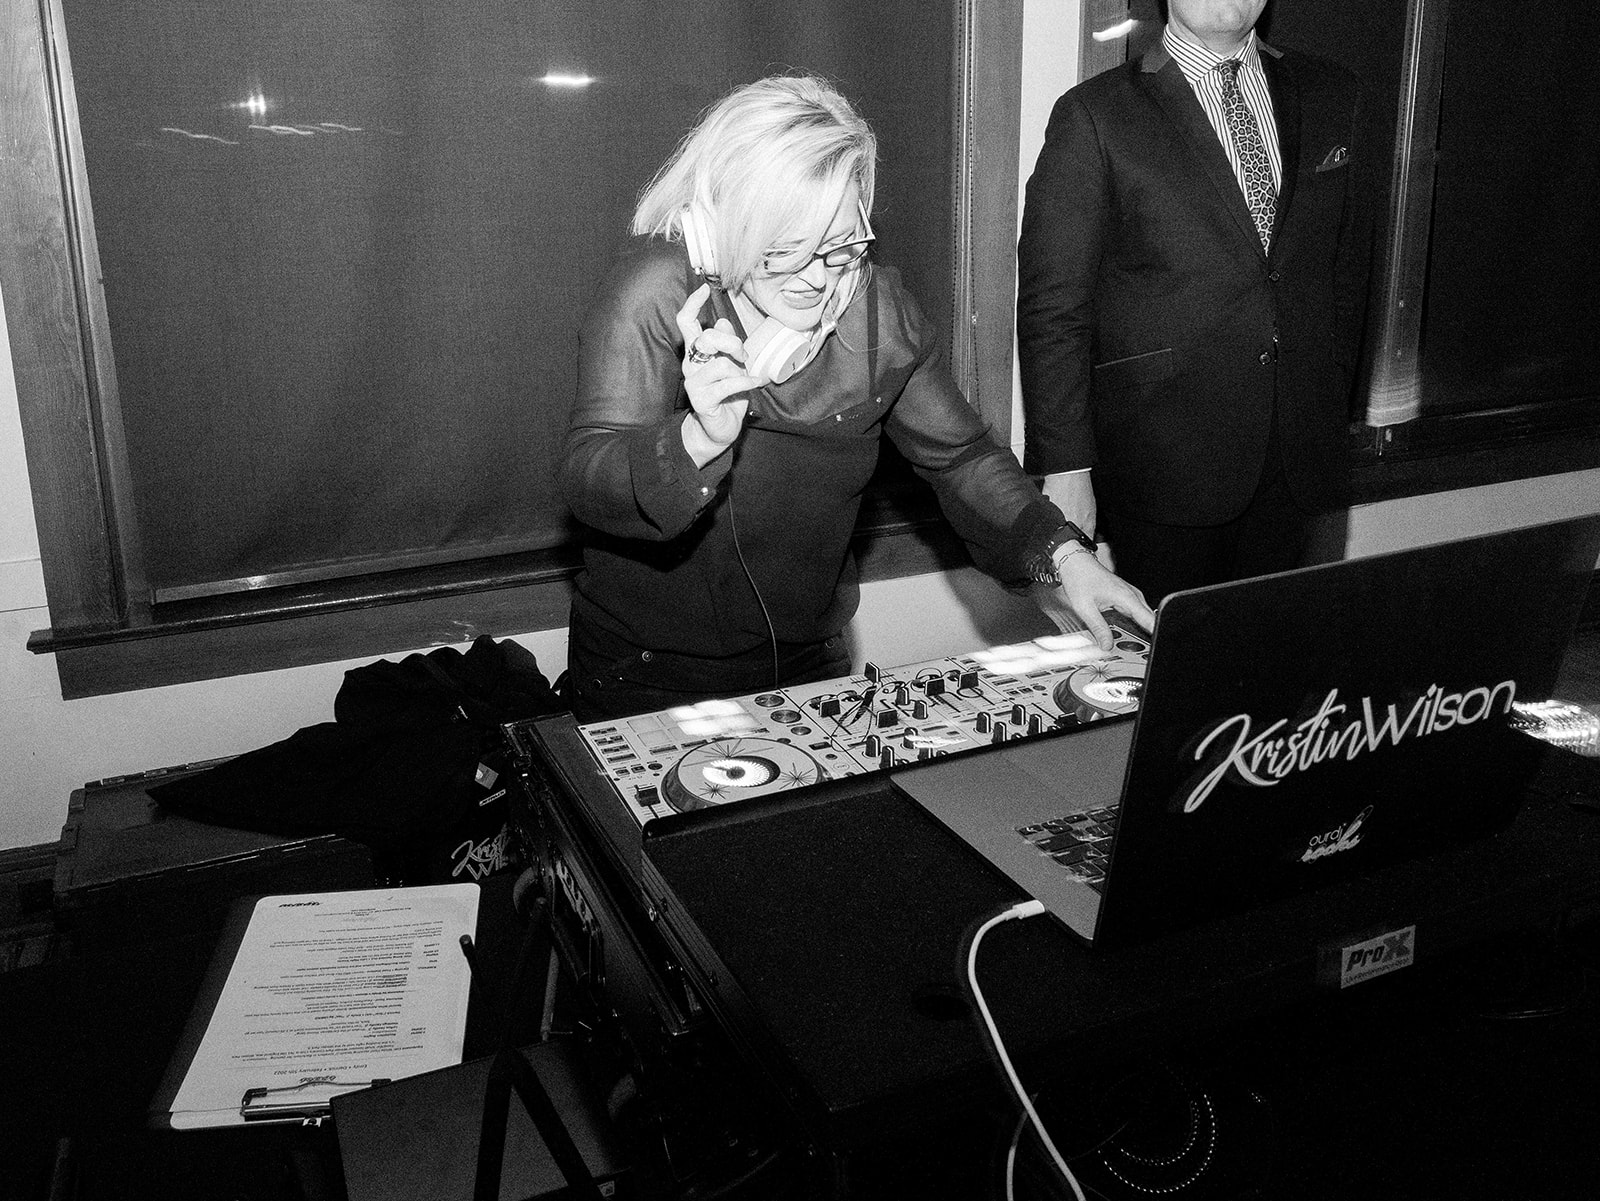 DJ Kristin behind the sound booth